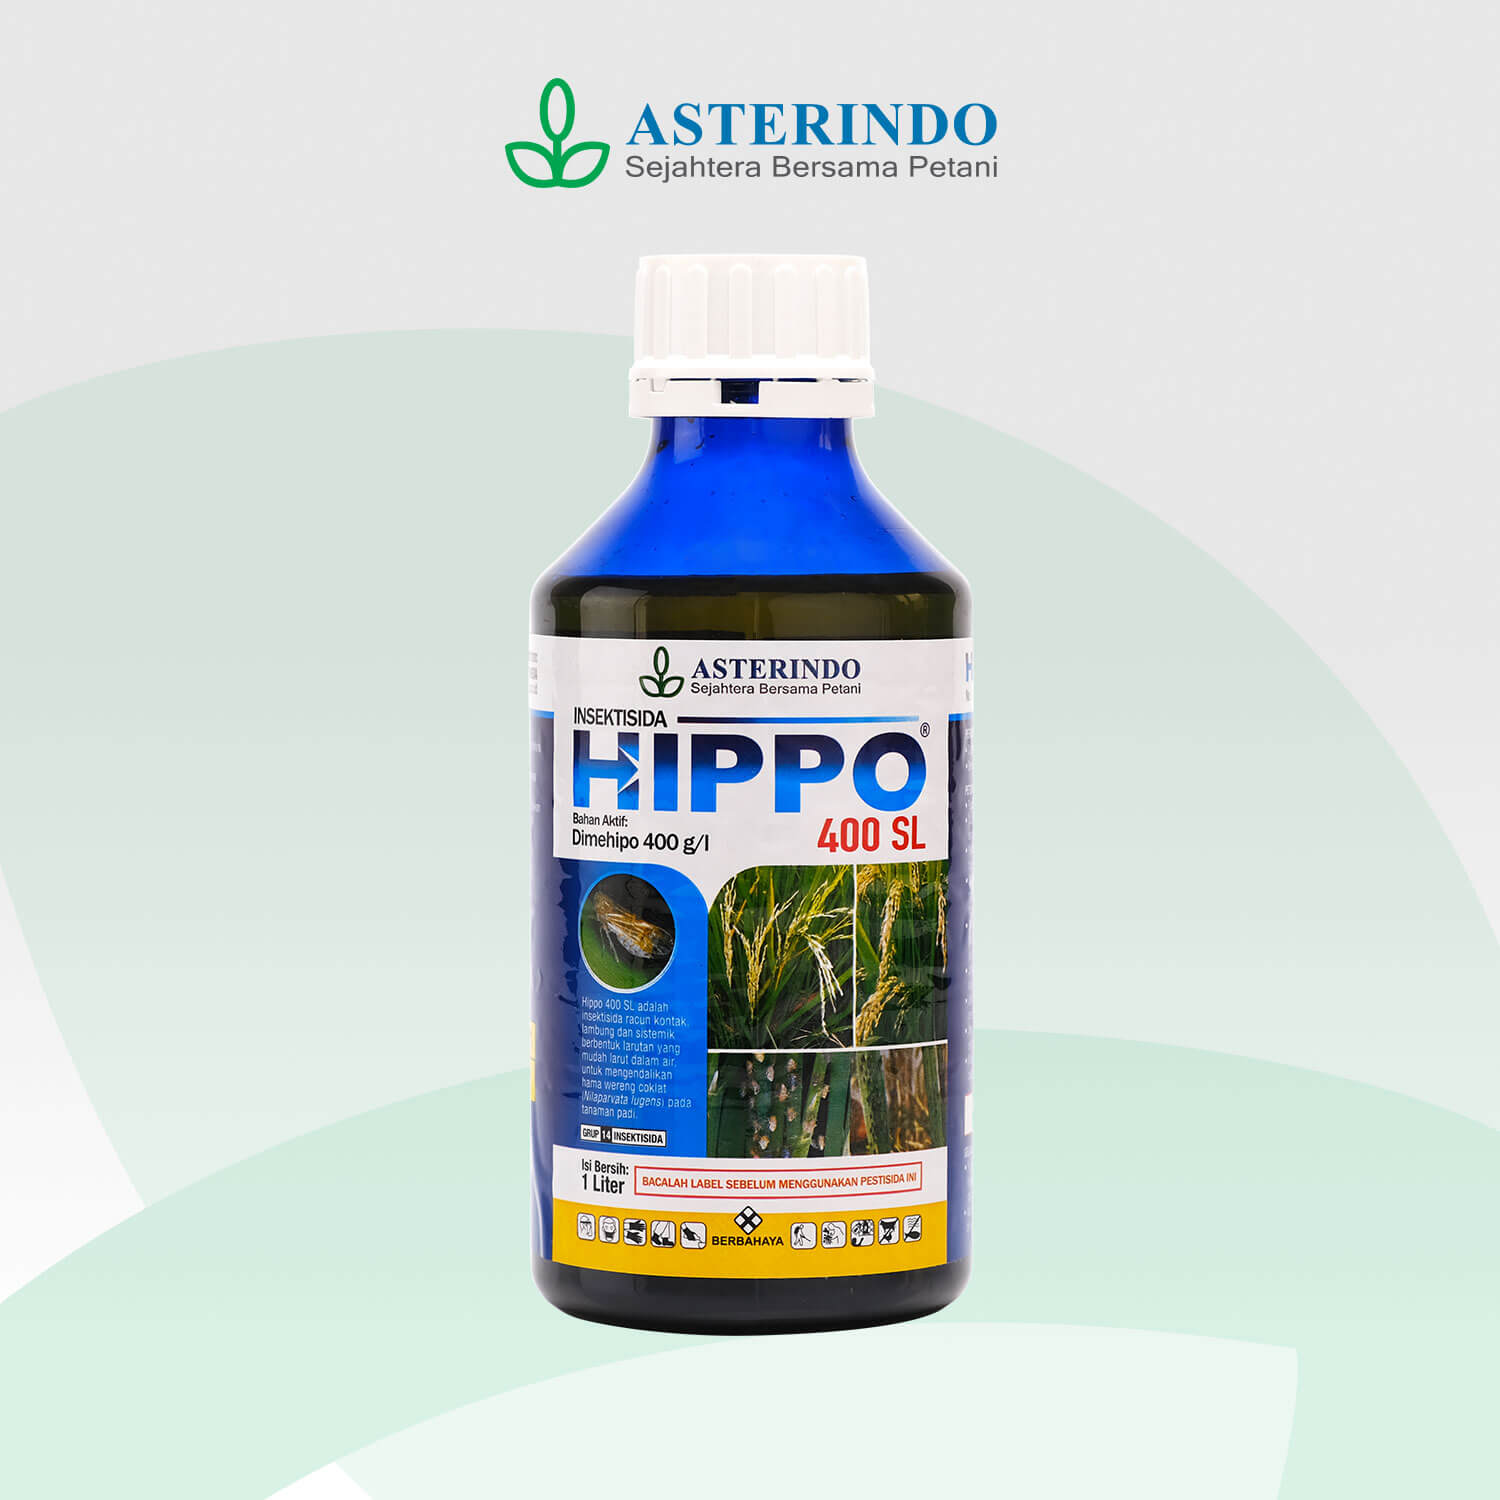 HIPPO-insektisida-Asterindo